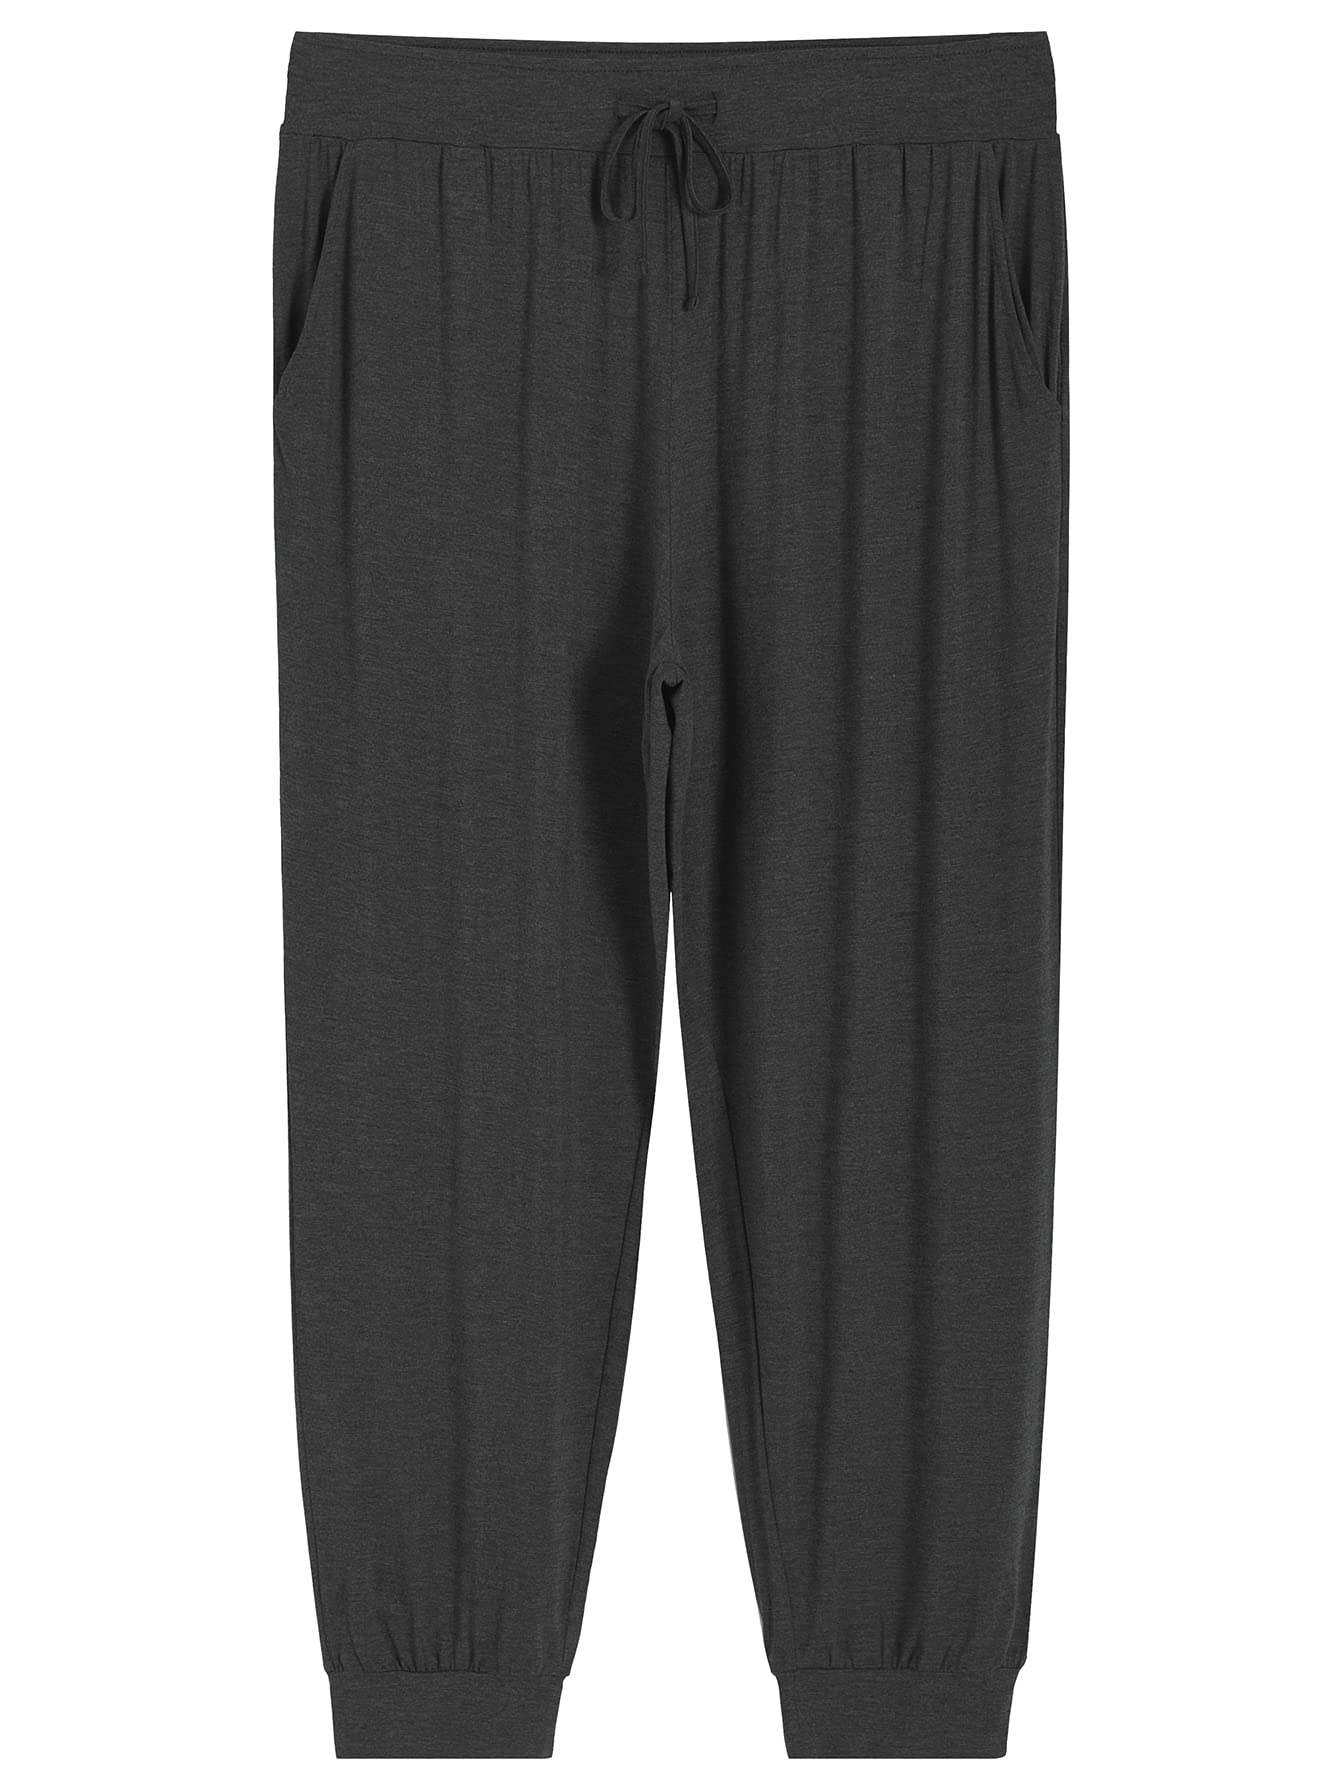 Wholesale Men's Fleece Pajama Pants - 3X-5X, Green/Black Plaid